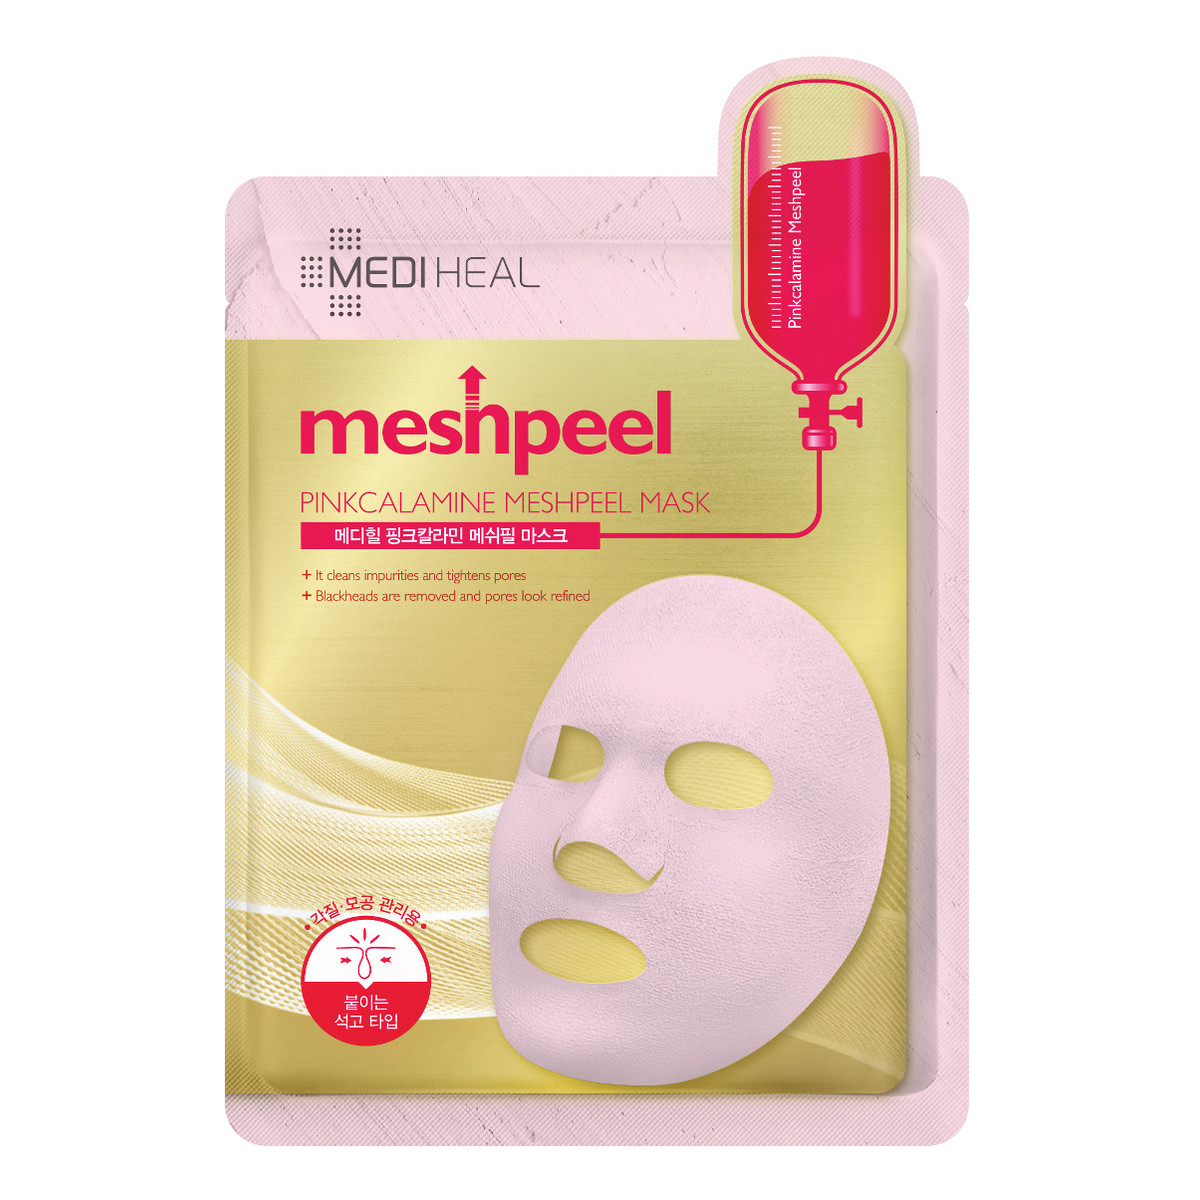 Mediheal Meshpeel maska z pudrem kalaminowym do twarzy 17g